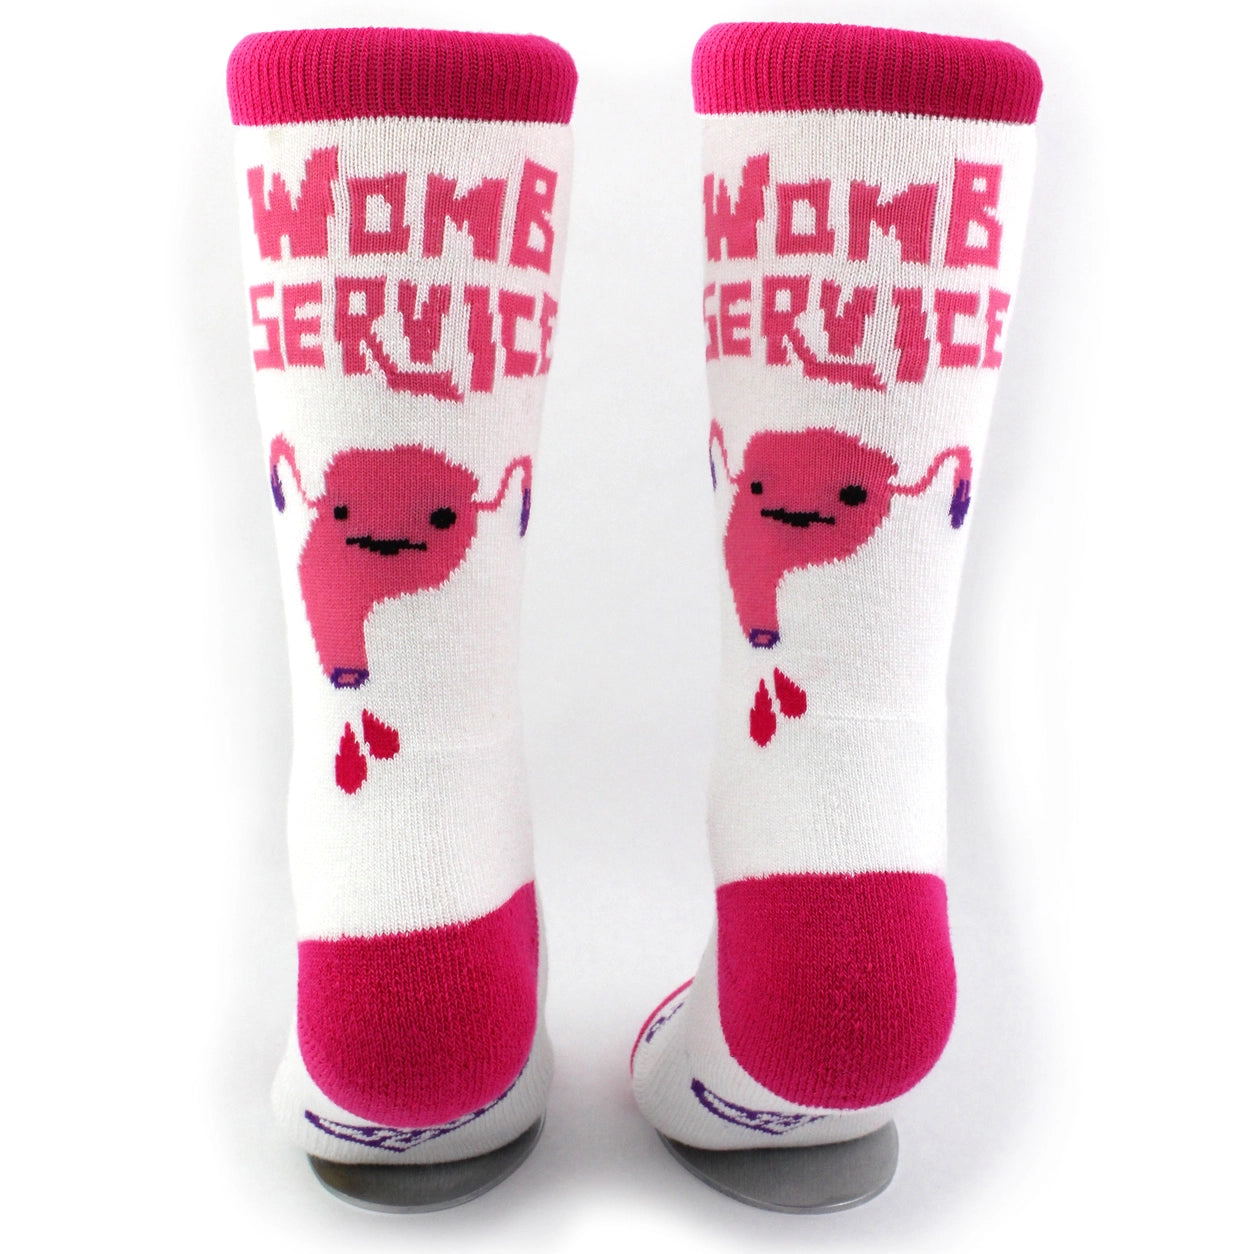 socks uterus & ovaries - Ova Achiever